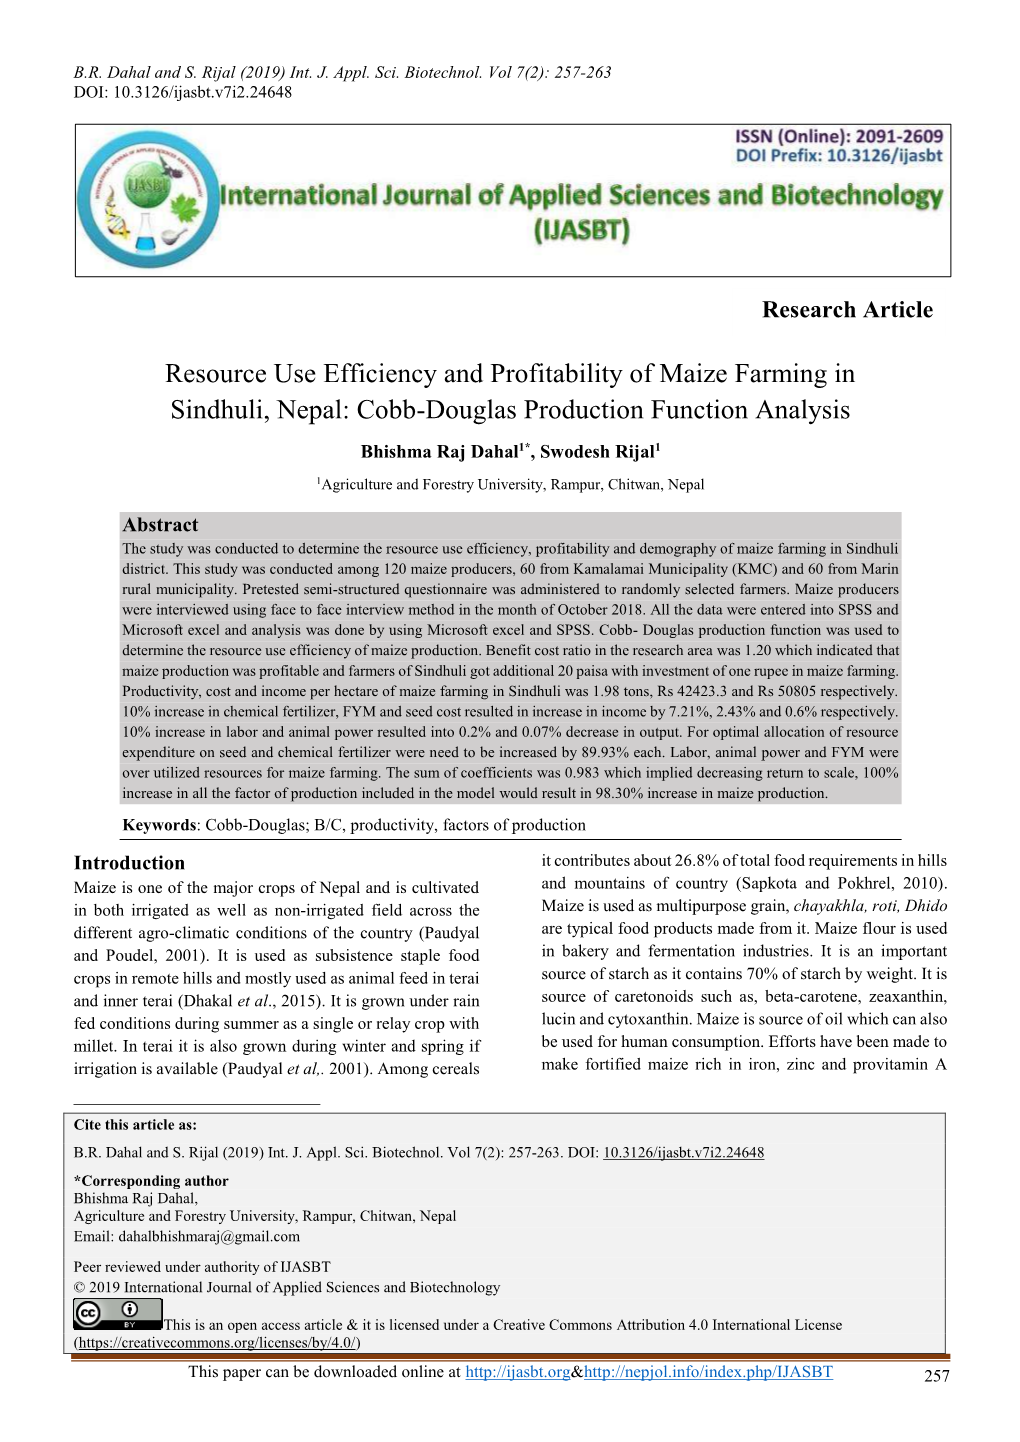 Resource Use Efficiency and Profitability of Maize Farming in Sindhuli, Nepal: Cobb-Douglas Production Function Analysis Bhishma Raj Dahal1*, Swodesh Rijal1